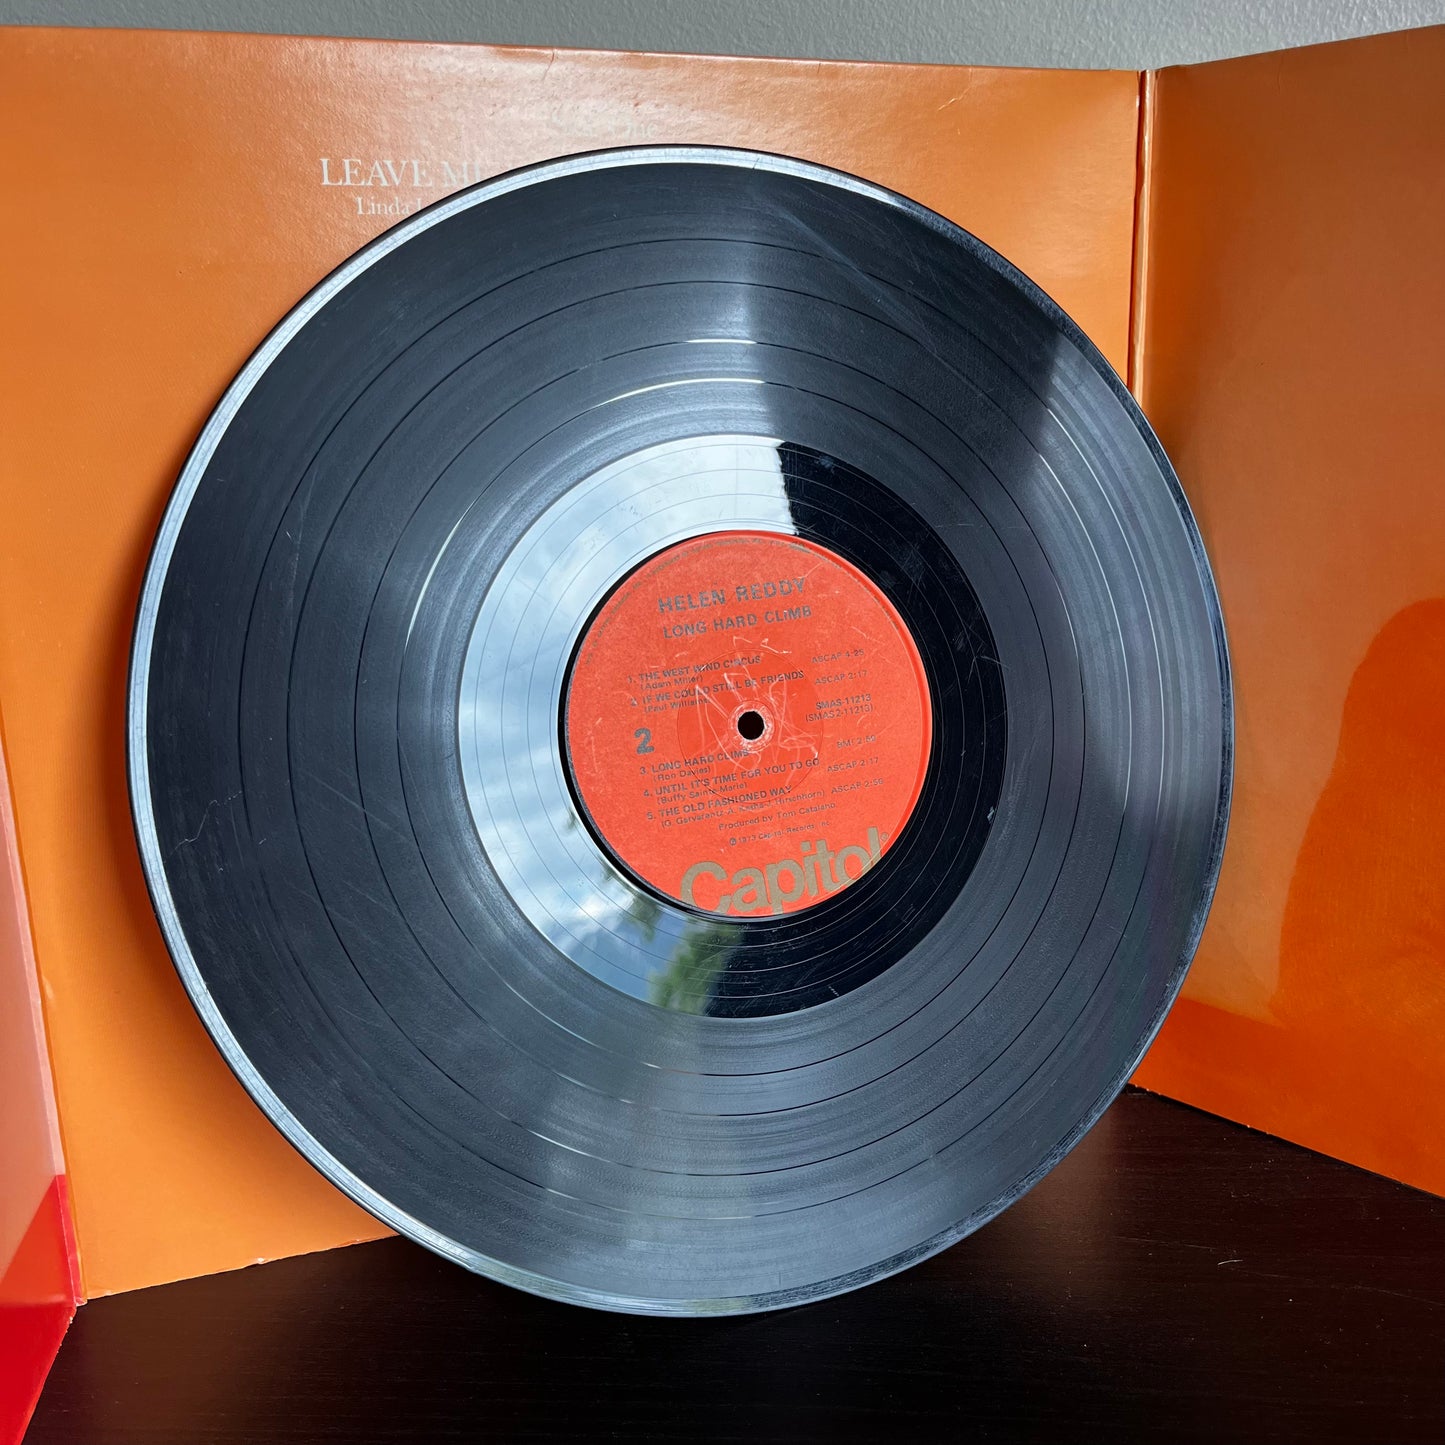 Long Hard Climb - Helen Reddy Capitol Used Vinyl SMAS-11213 VG Condition